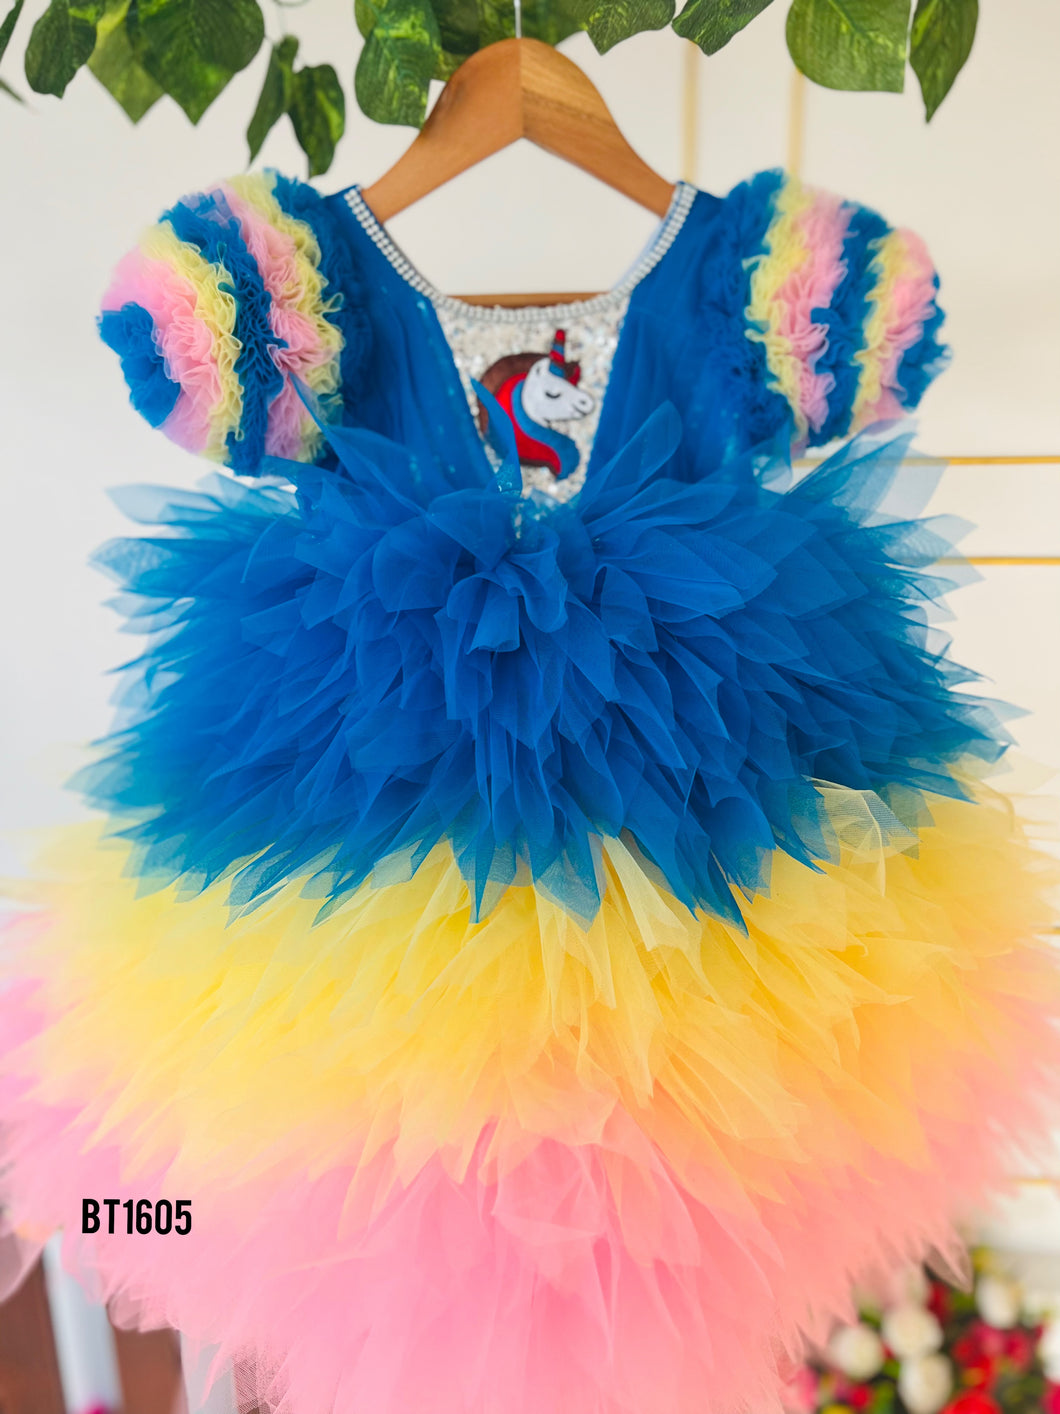 BT1605 Rainbow Unicorn - Vibrant Baby Party Frock